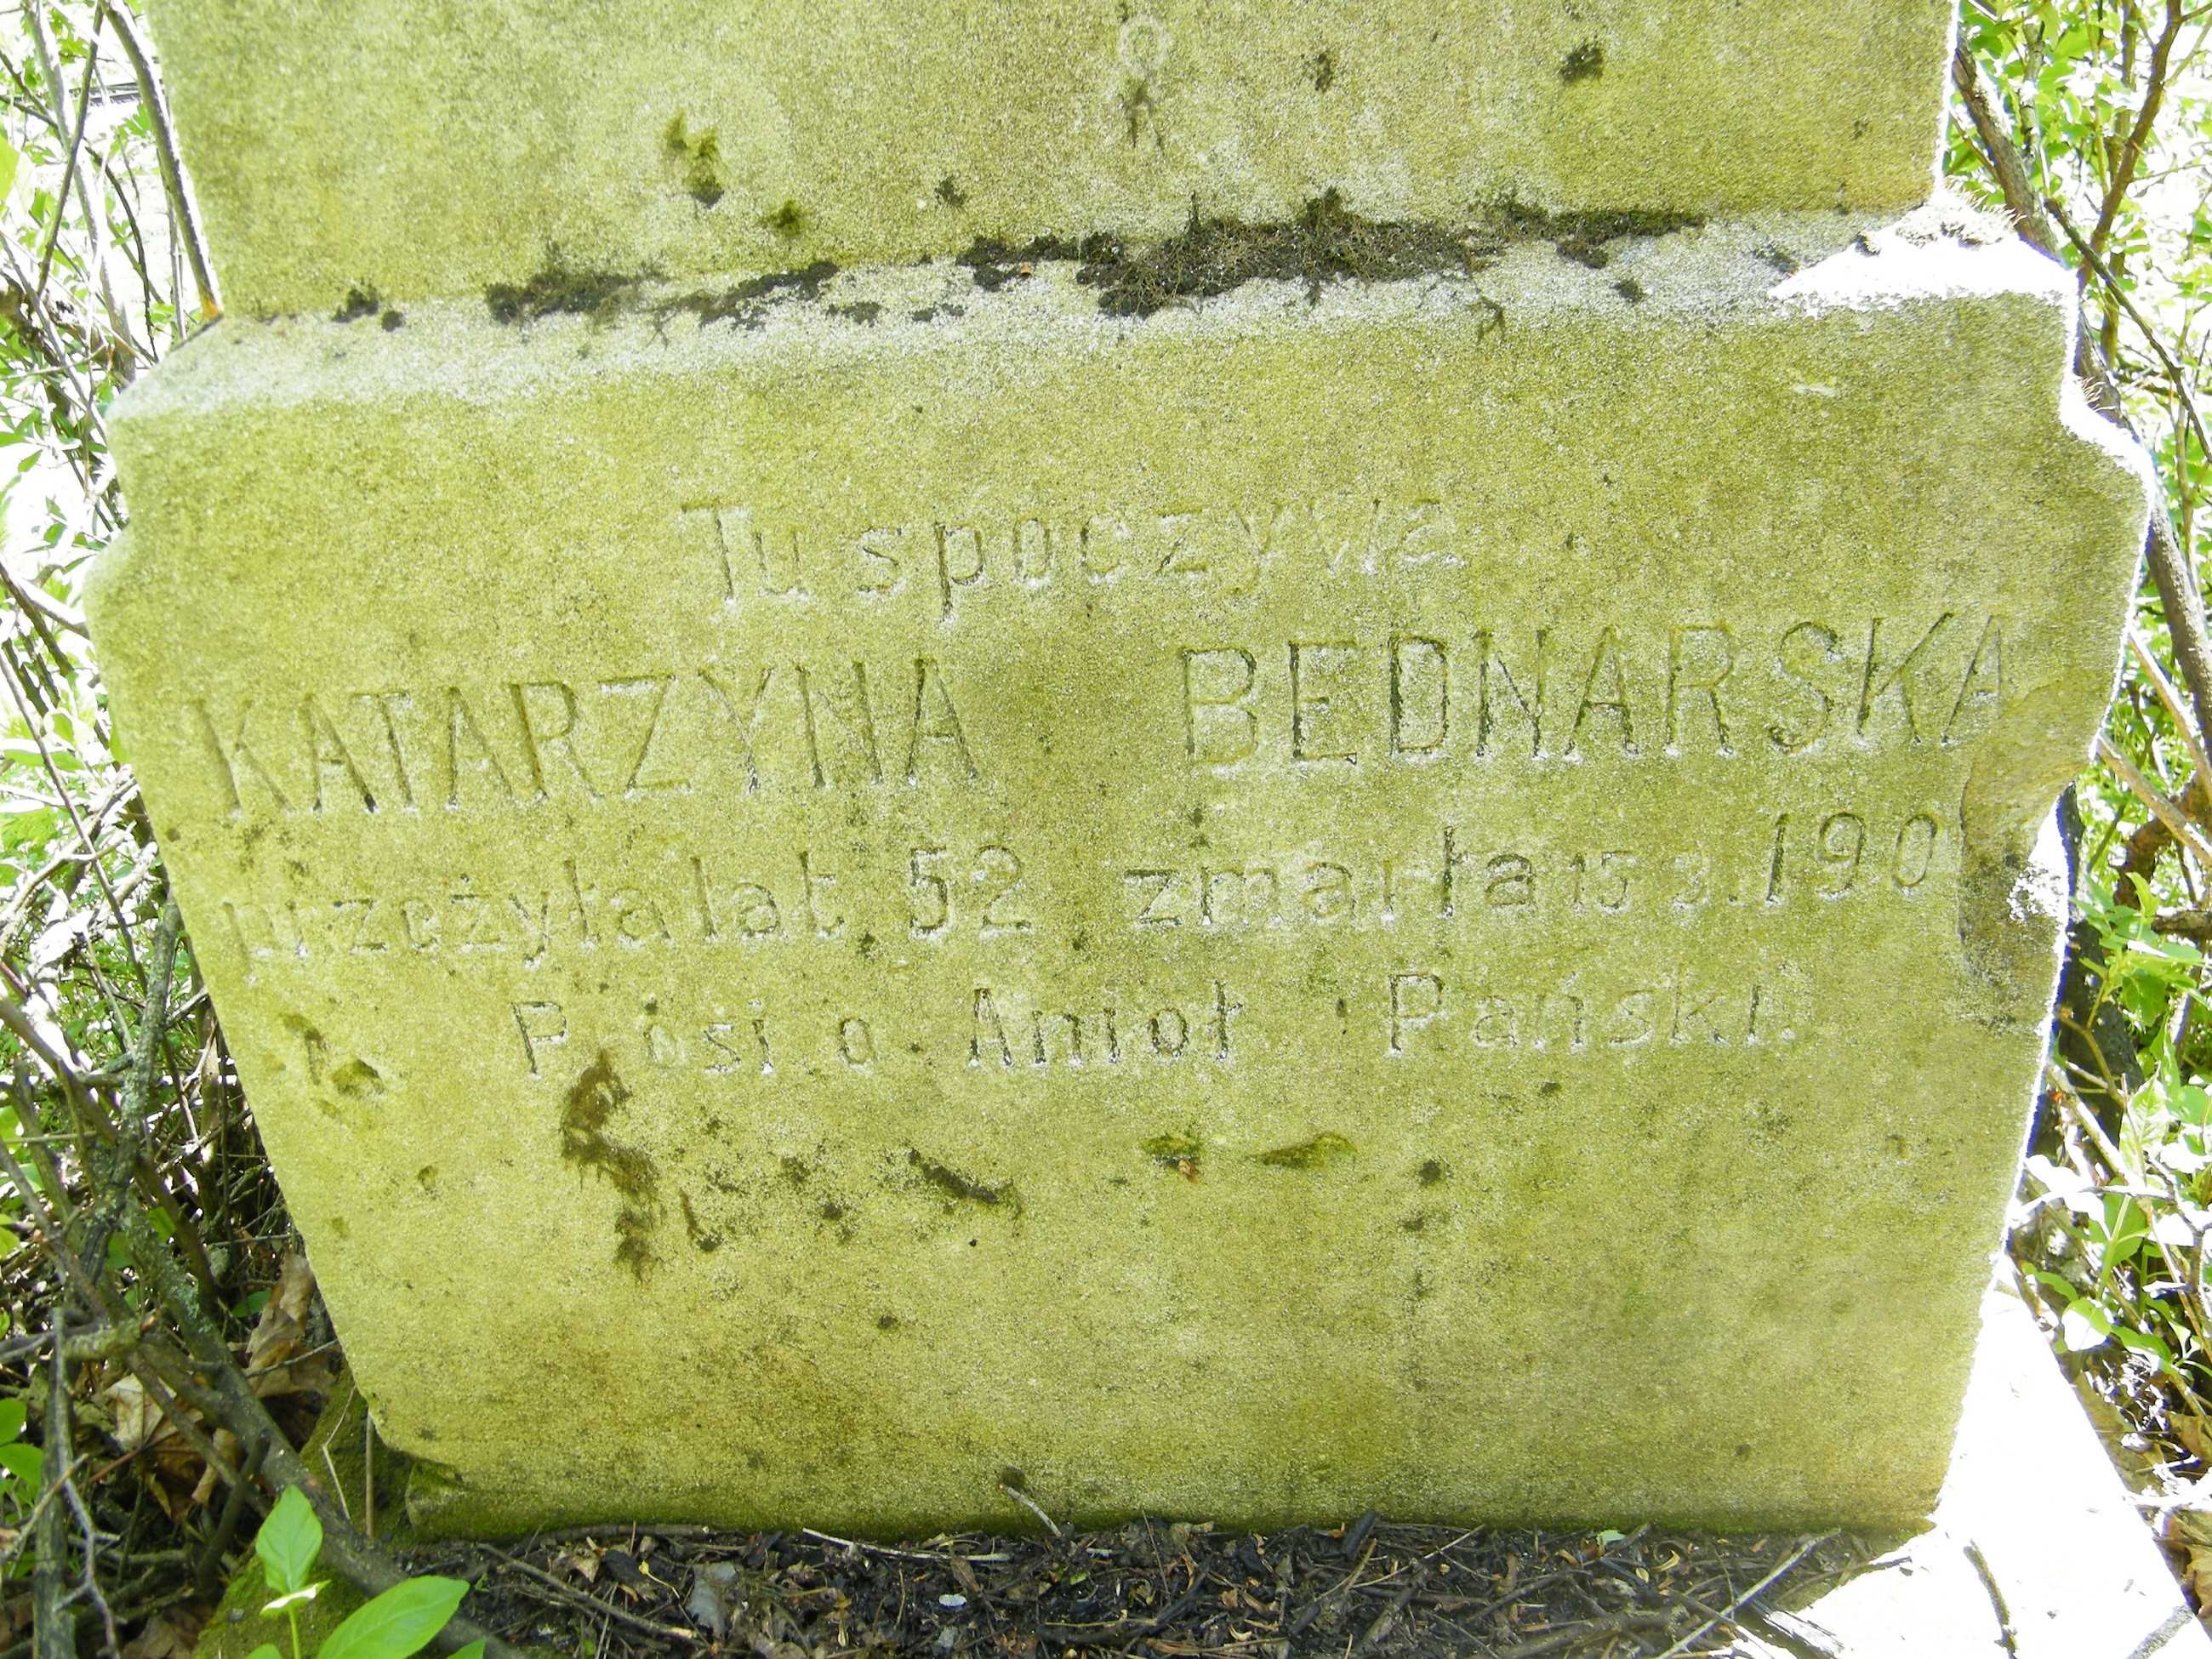 Inscription from the gravestone of Katarzyna Bednarska, Cemetery in Łozowa